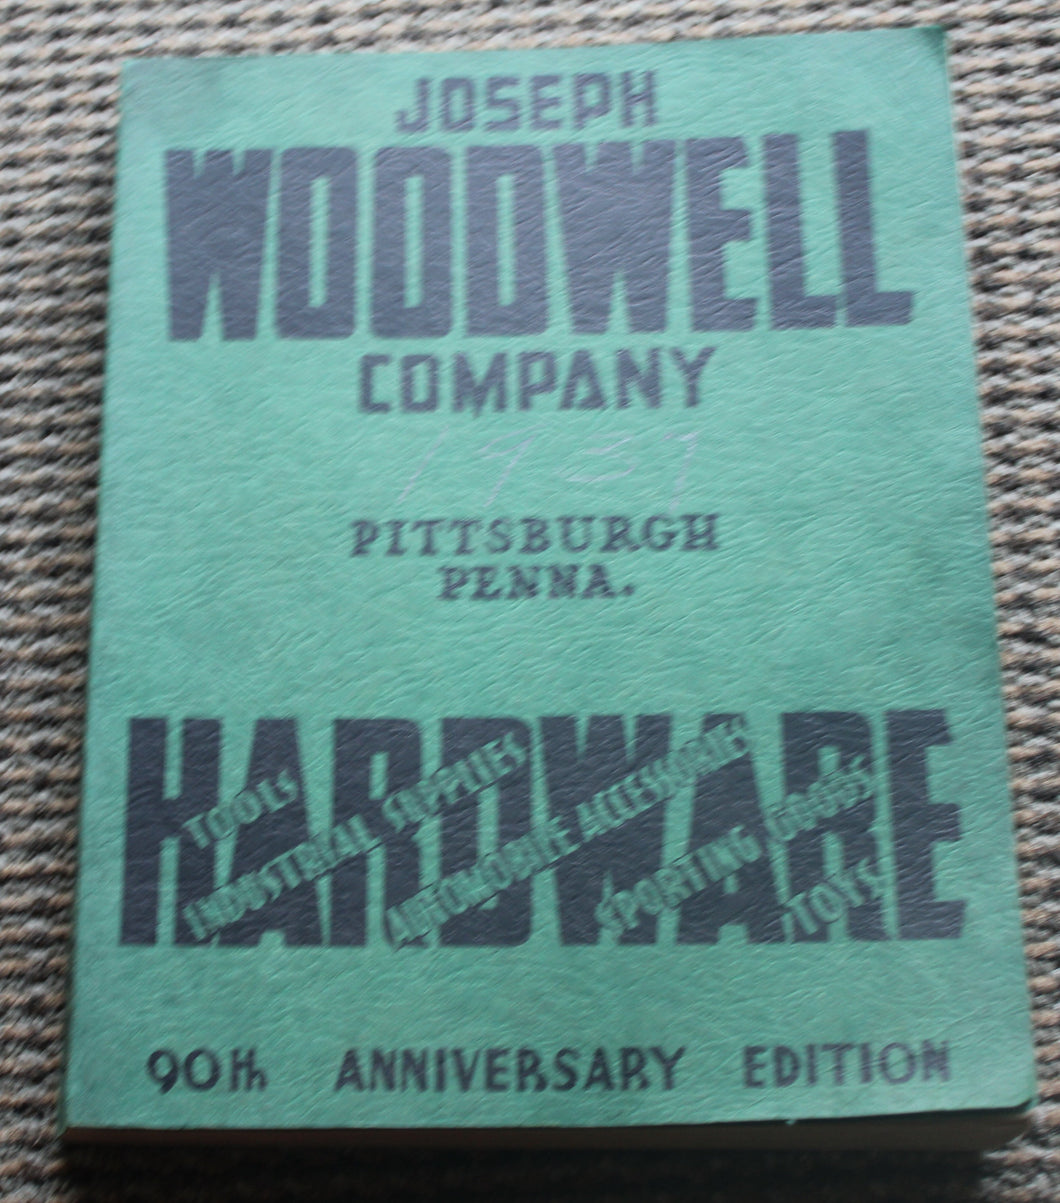 Joseph Woodwell Company Hardware 90th Anniversary Catalog Issue - Pittsburgh